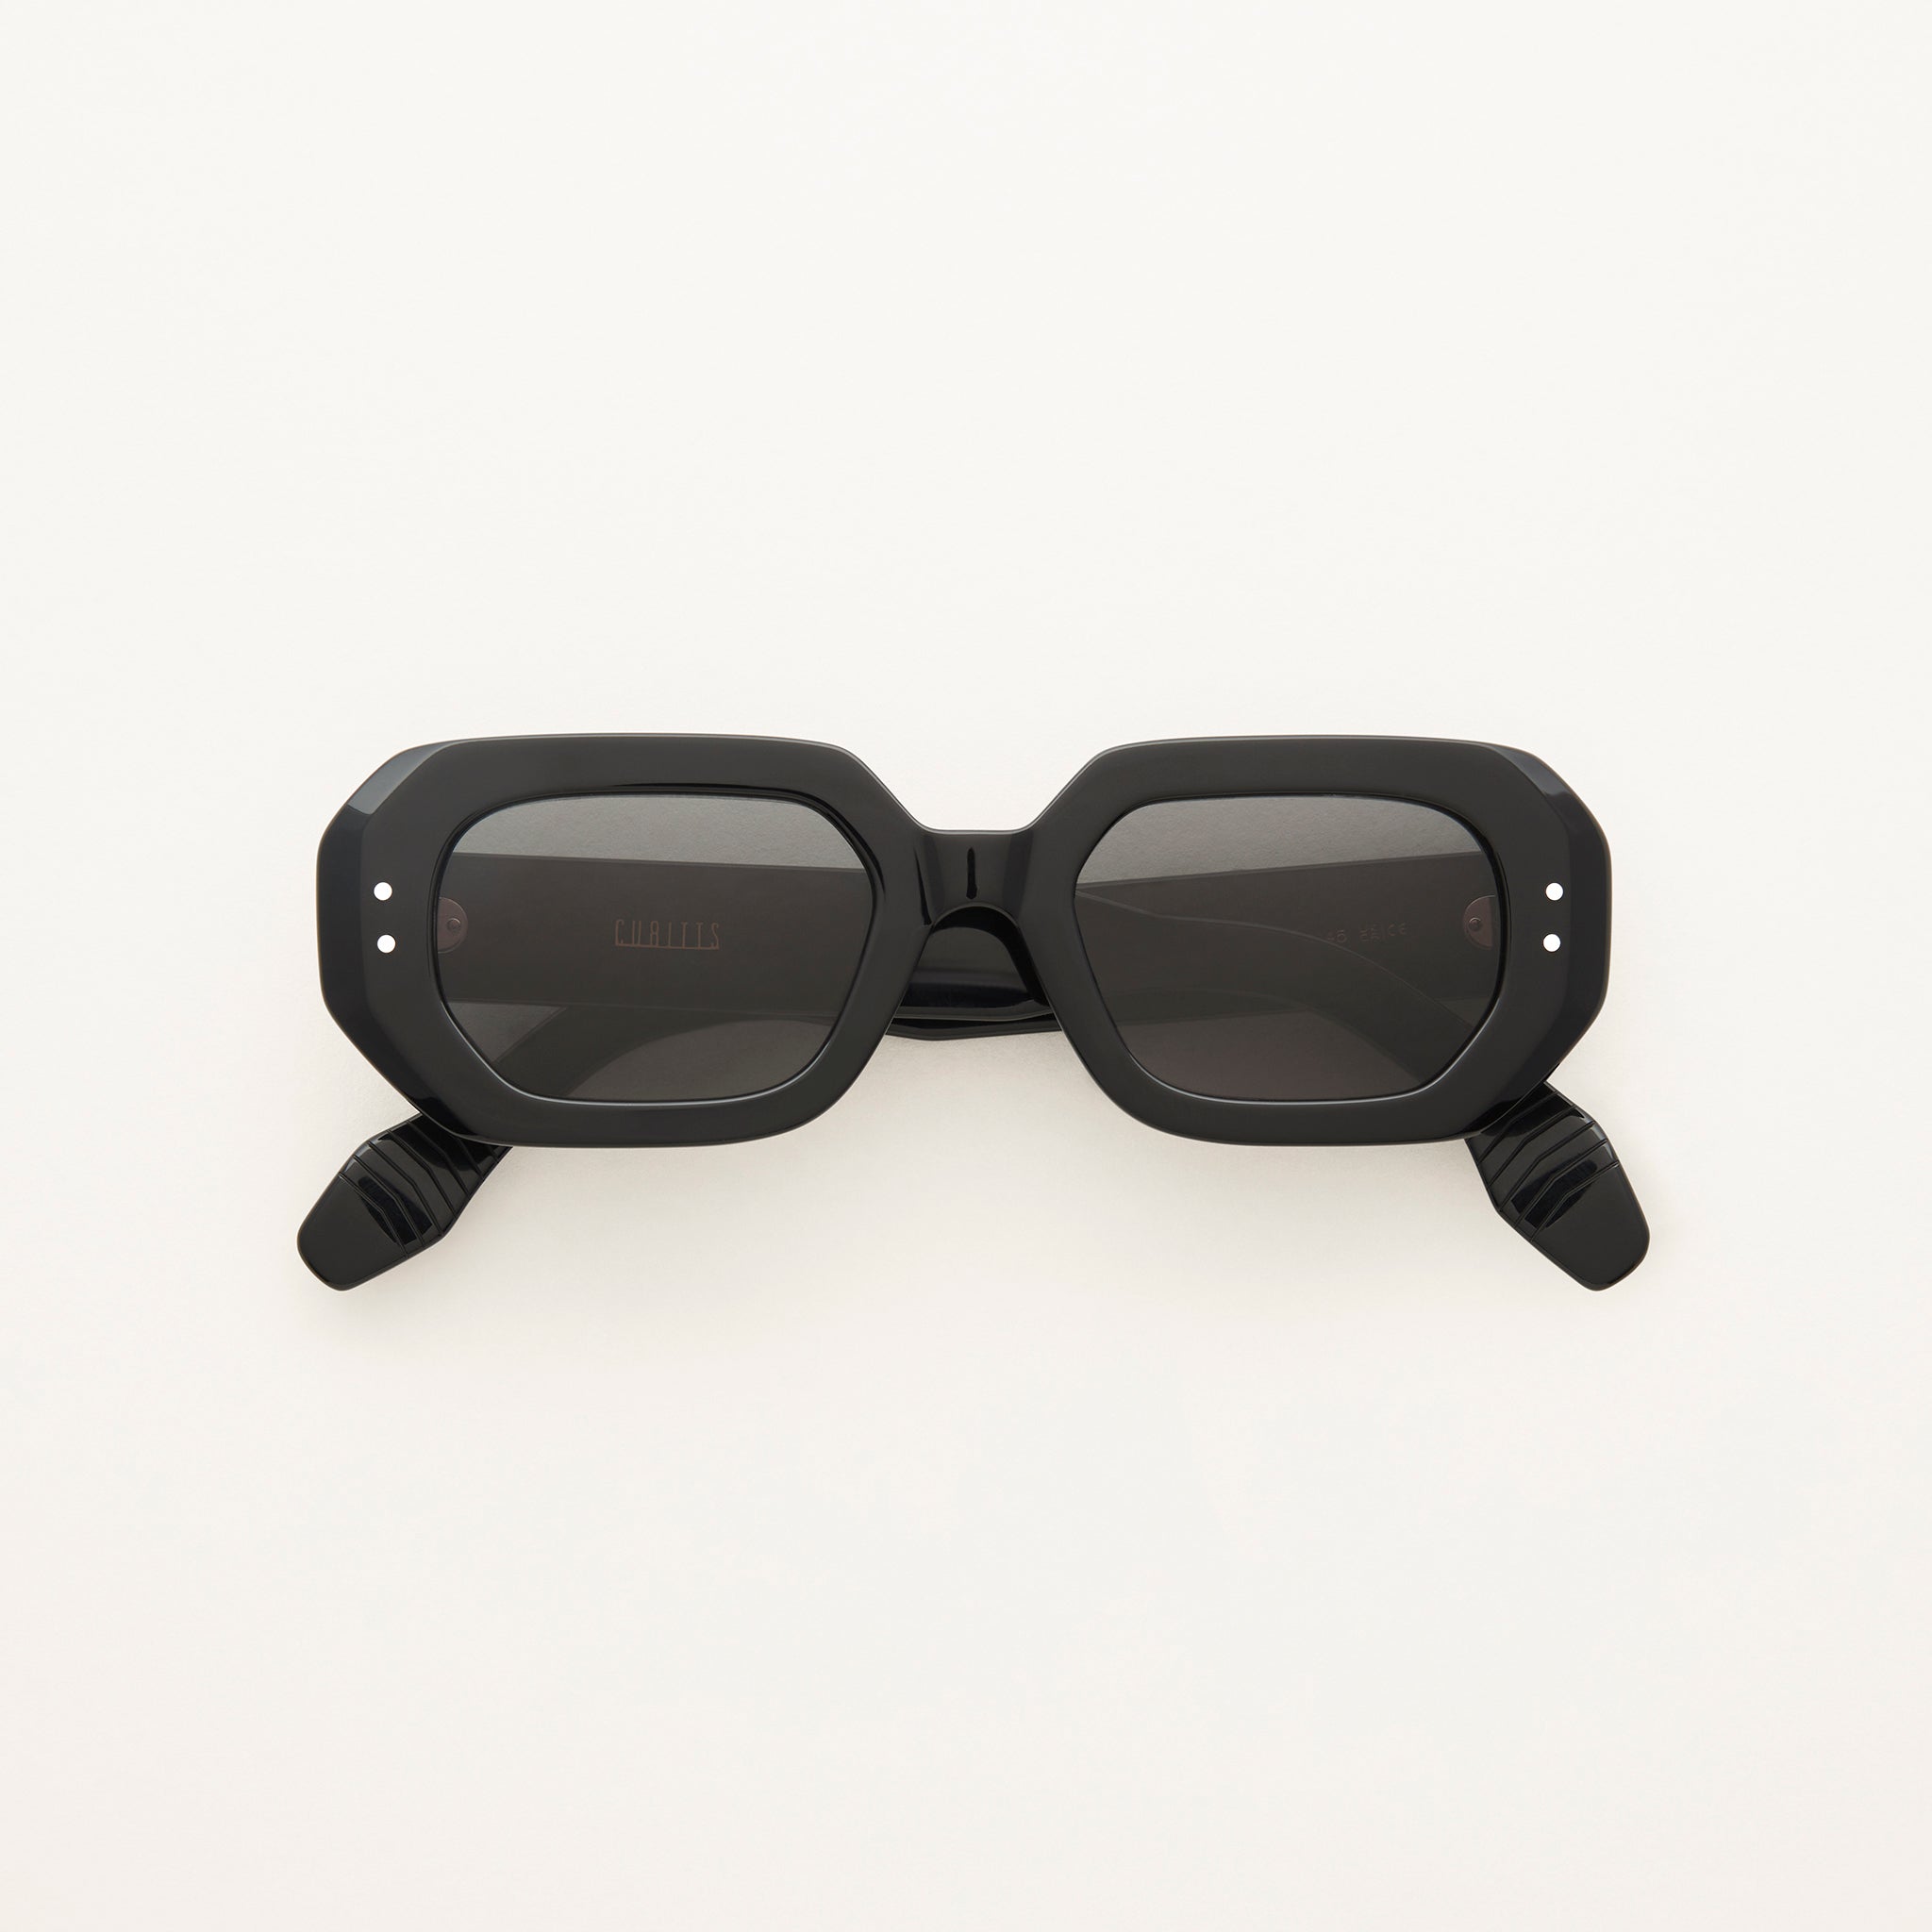 Grimaldi: Sculptural and distinctive sunglasses | Cubitts